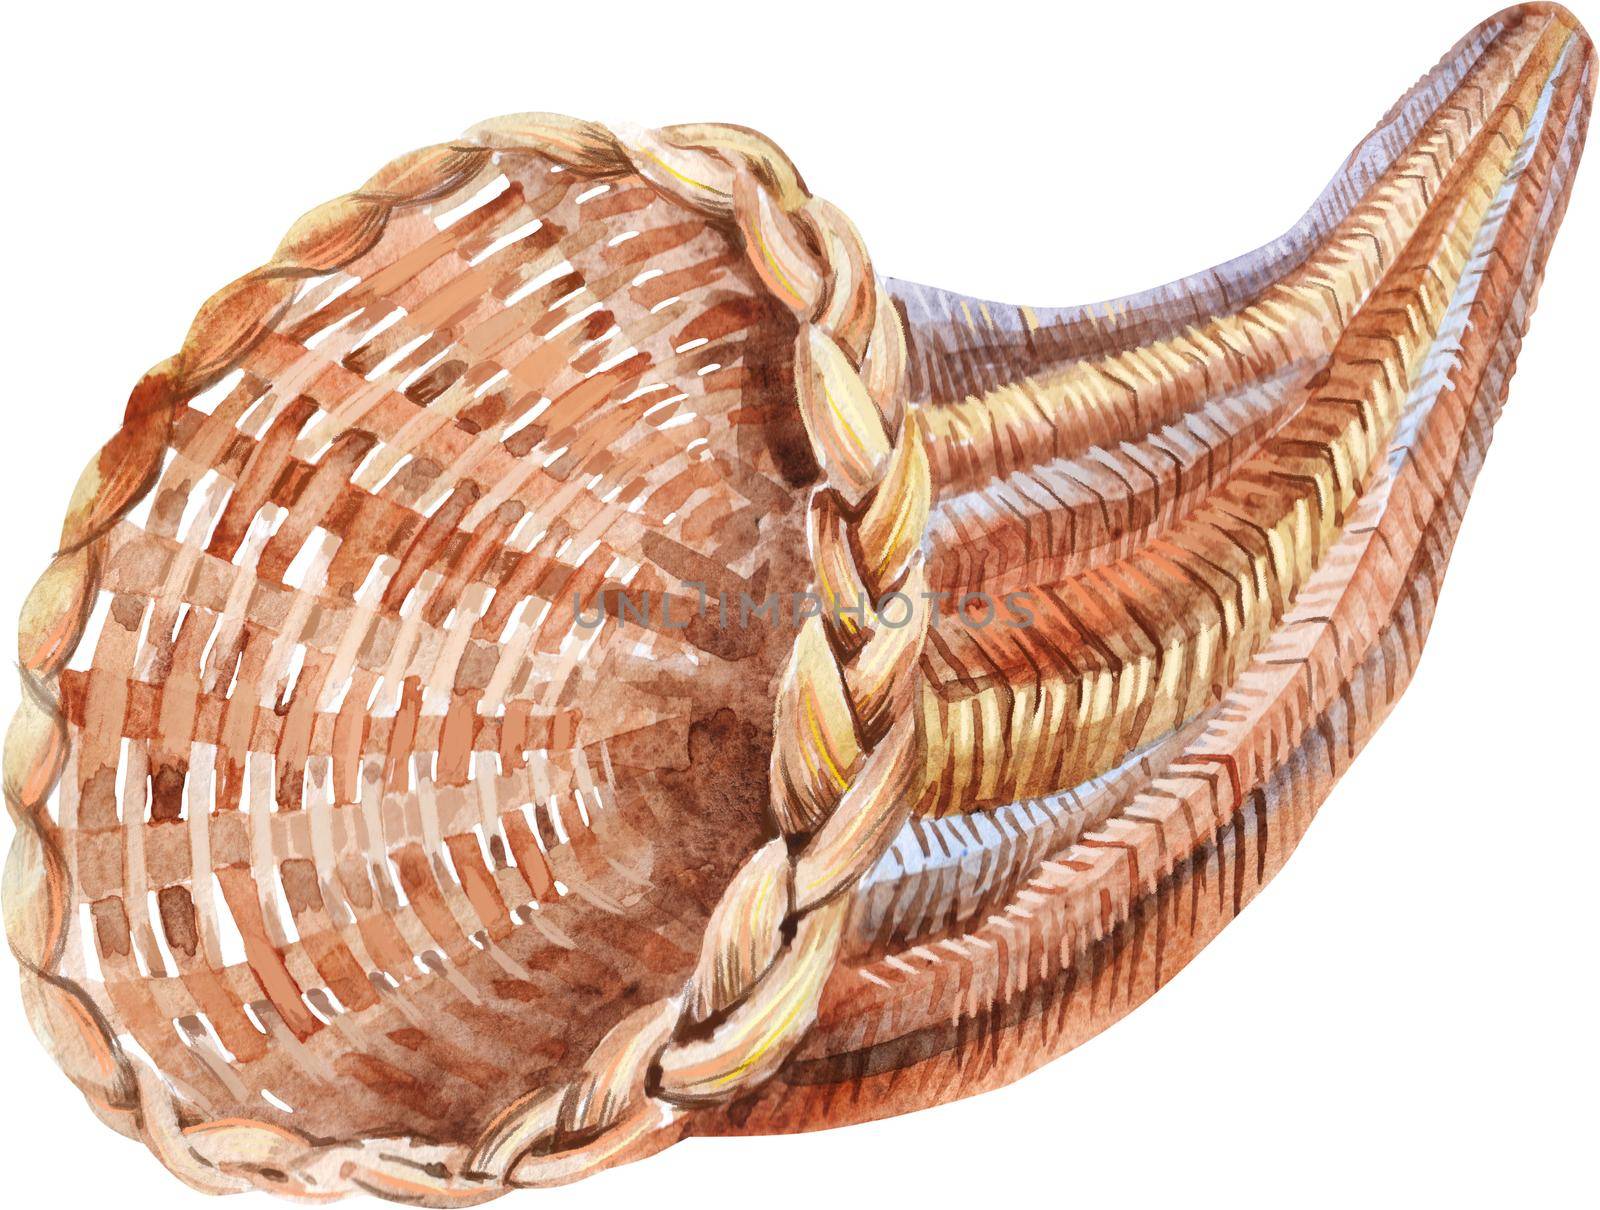 Illustration depicting an empty wicker cornucopia basket by NataOmsk